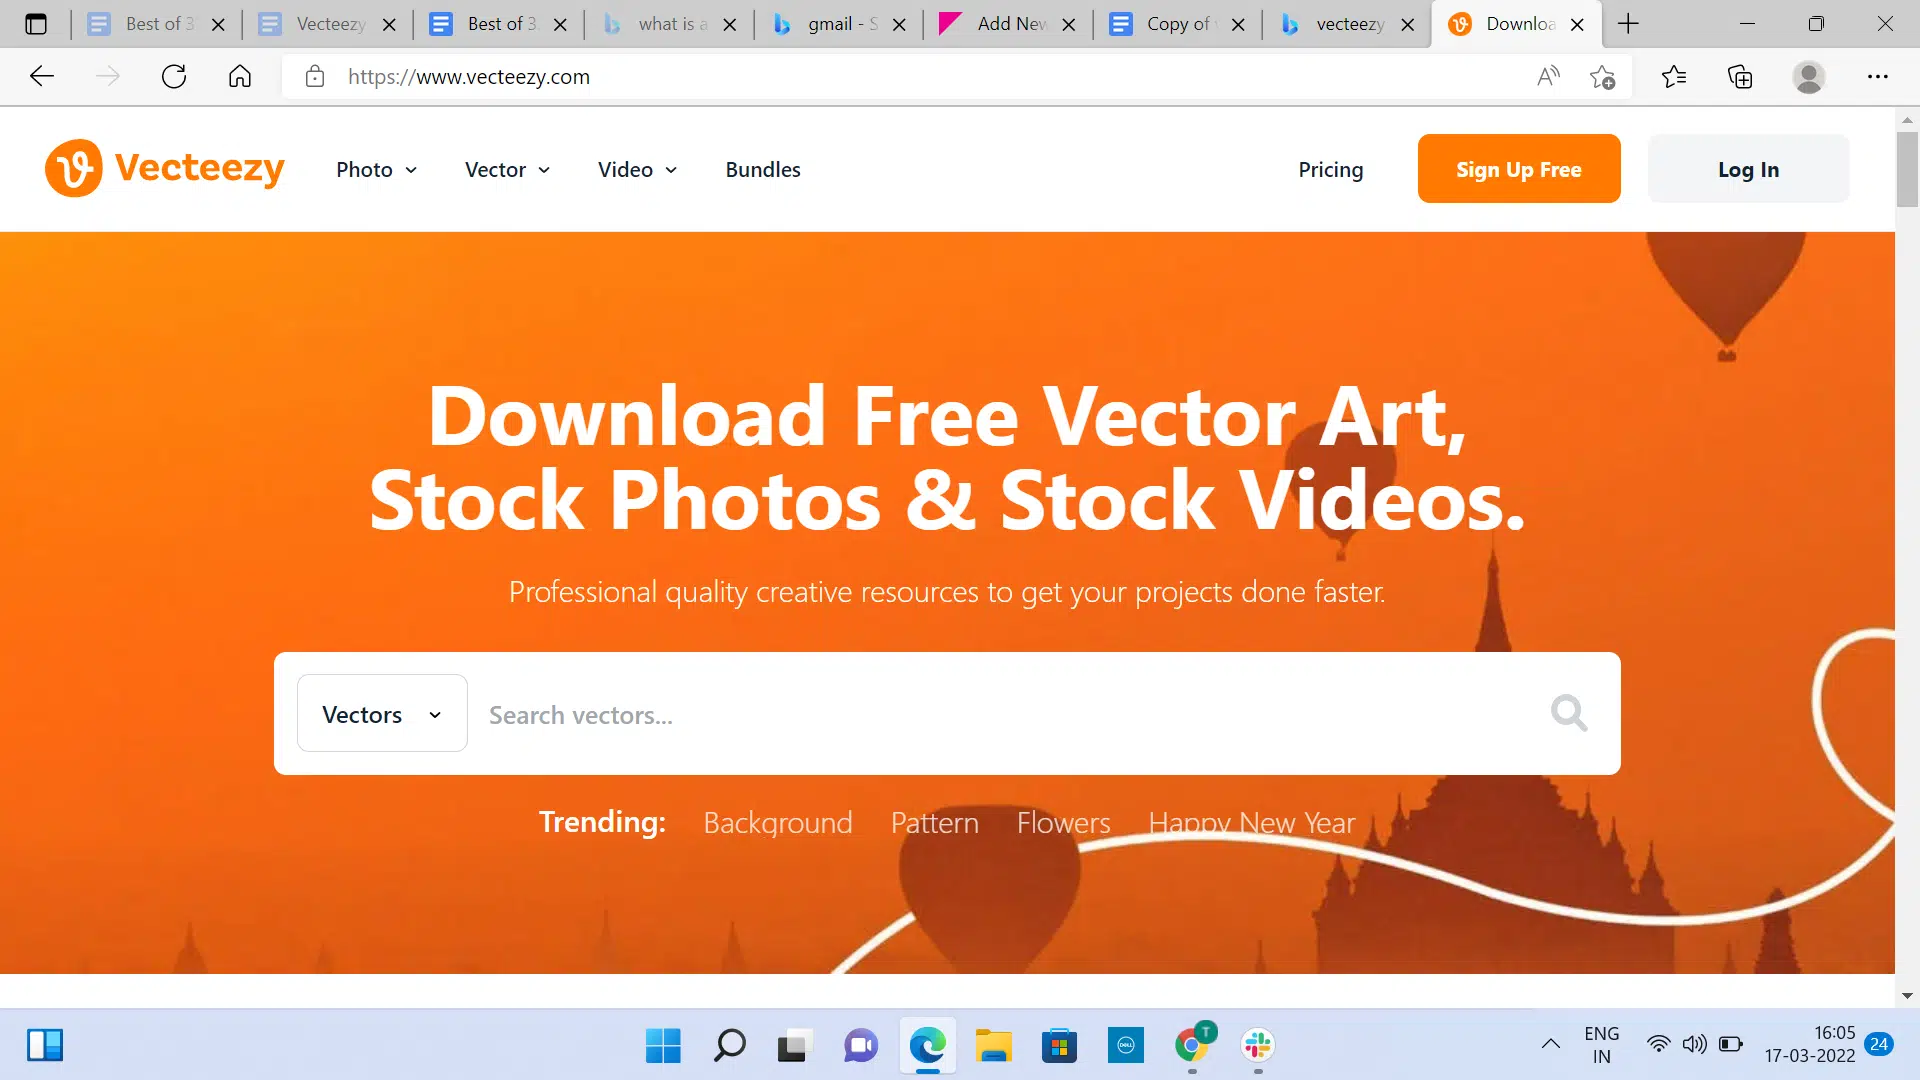 Download Free Vectors, Images, Photos & Videos, Vecteezy